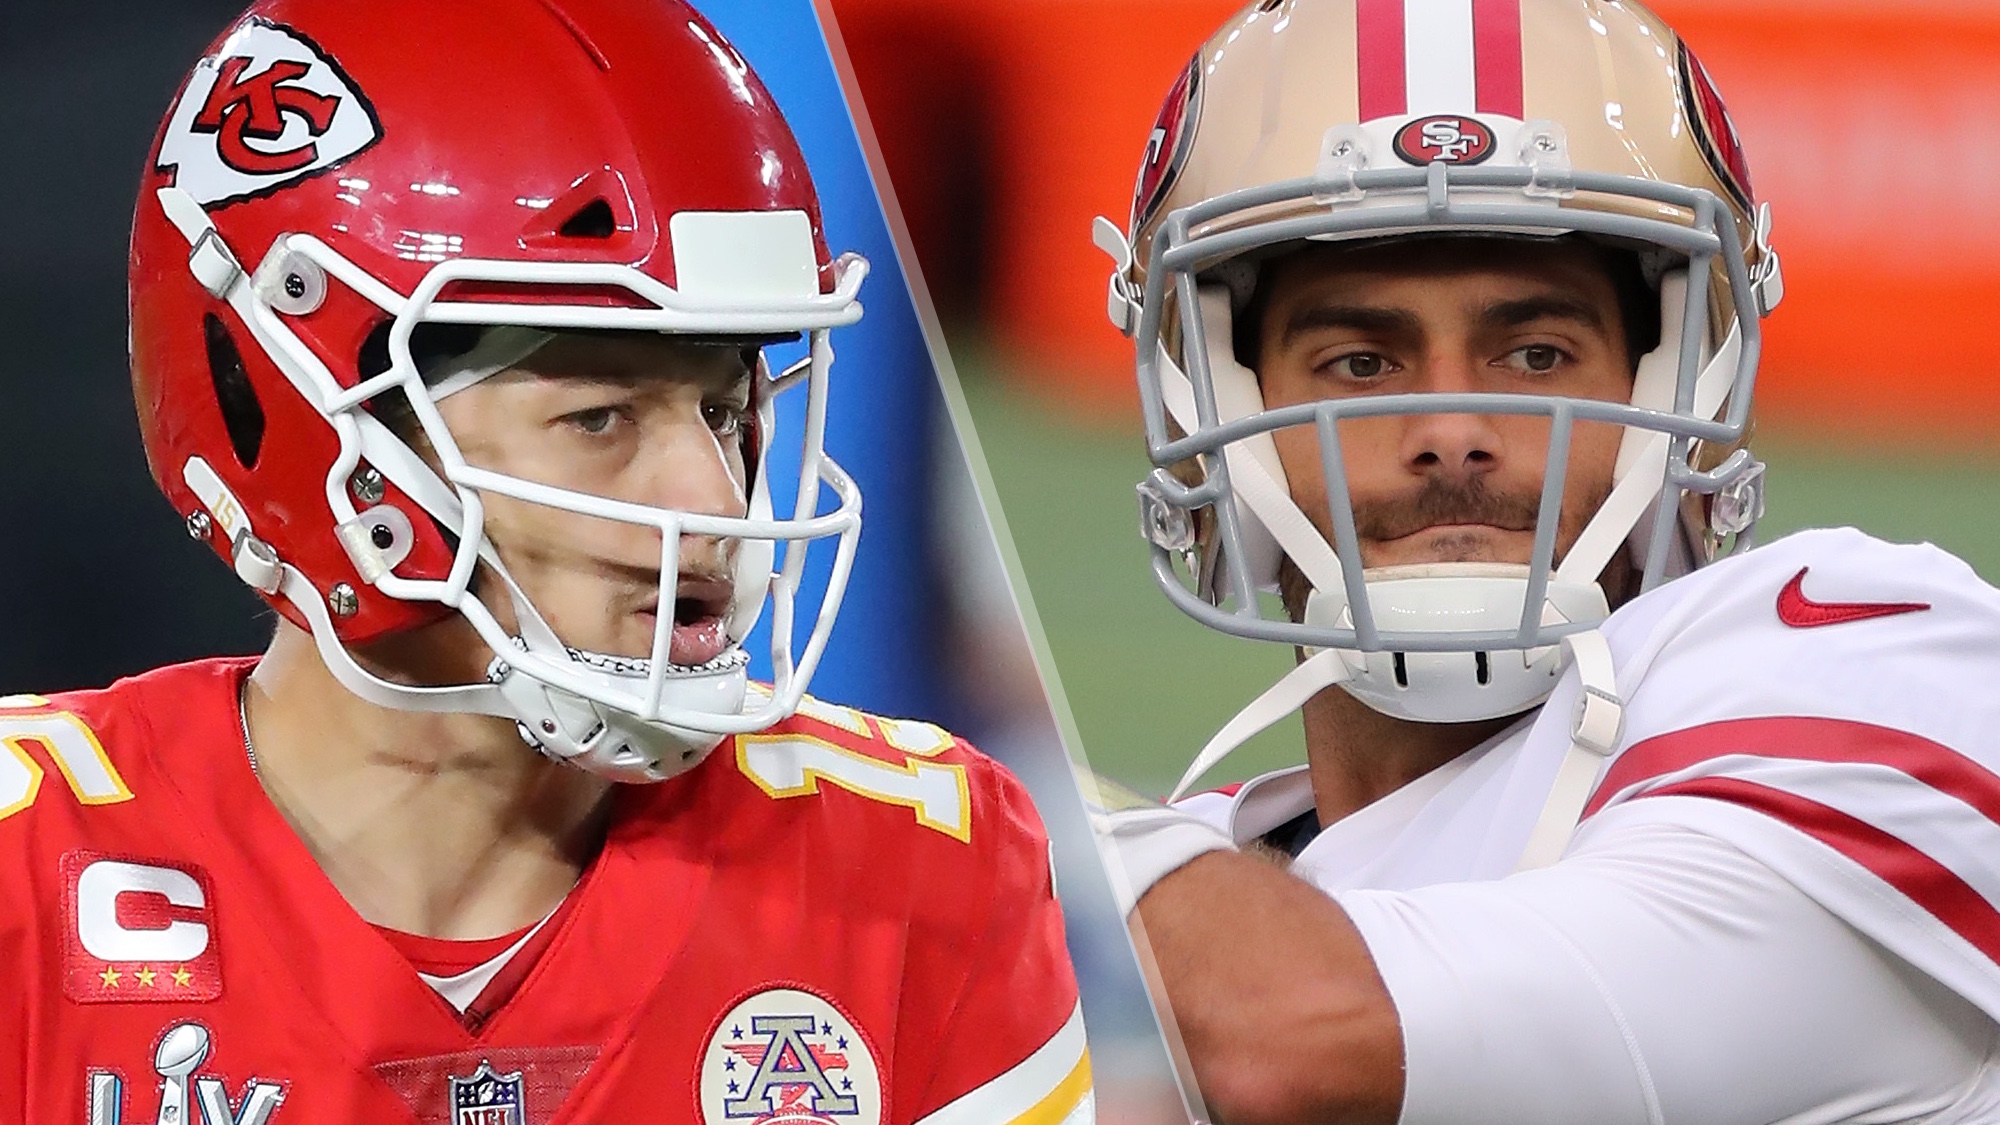 Chiefs vs 49ers live stream: How to watch 2021 NFL preseason game